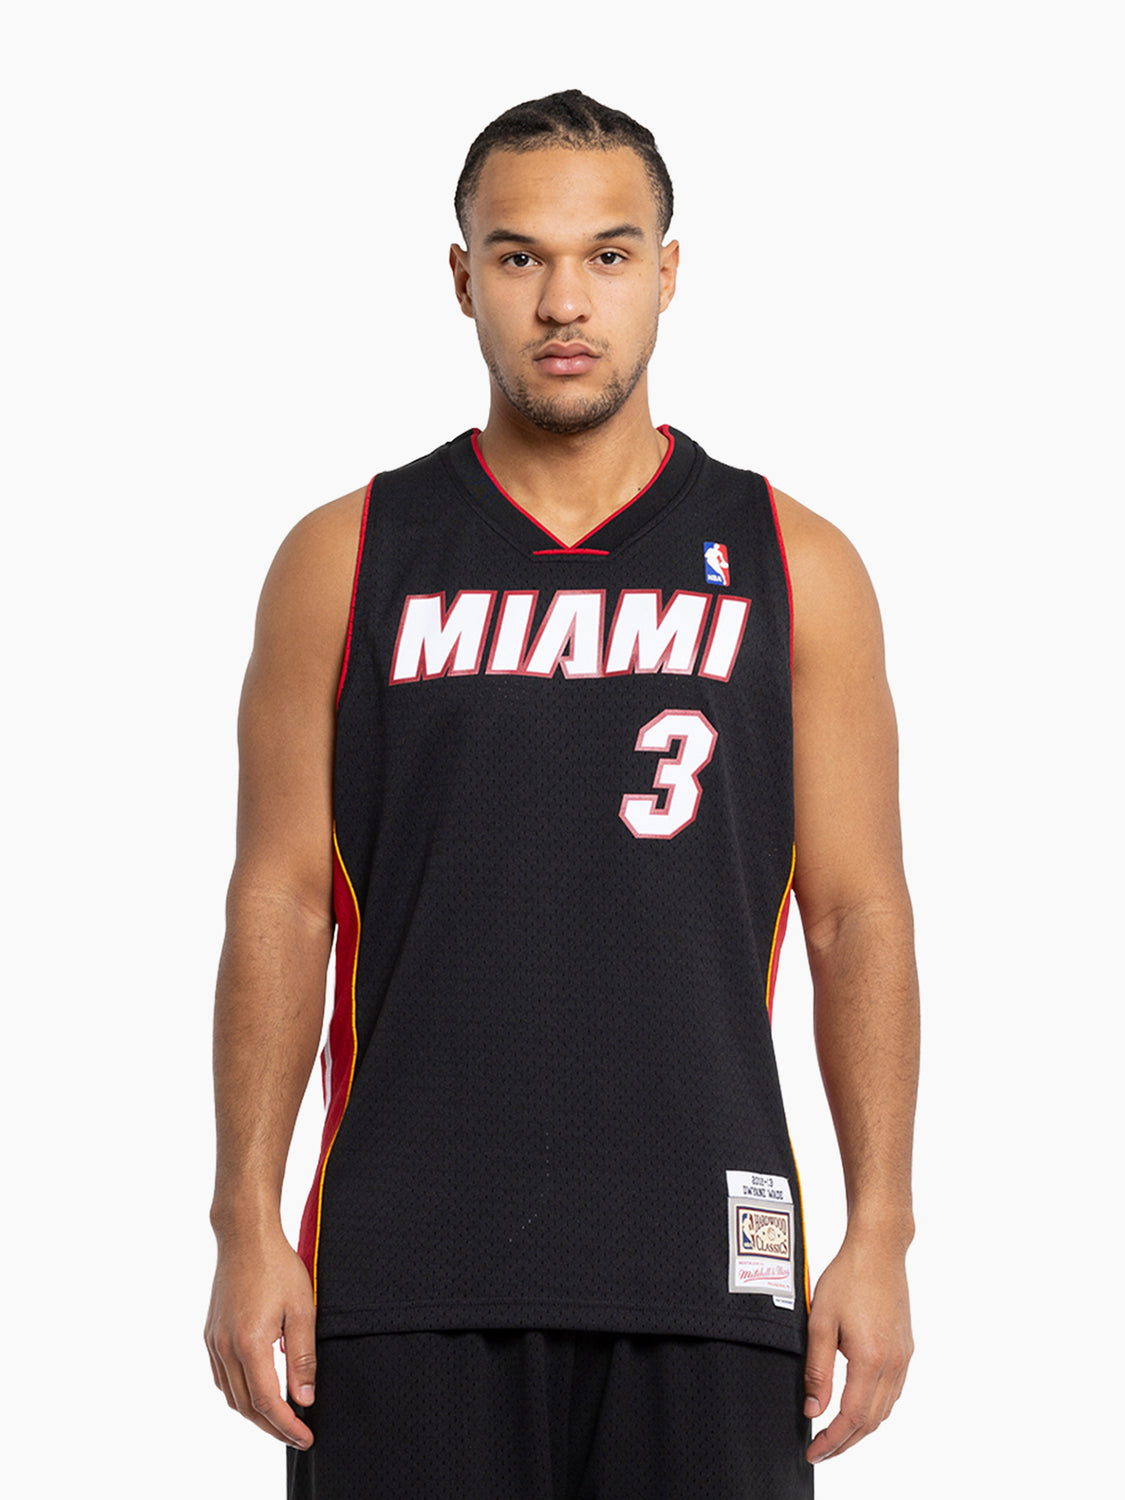 Nike Dwyane Wade Miami Heat Chinese Edition Swingman Jersey